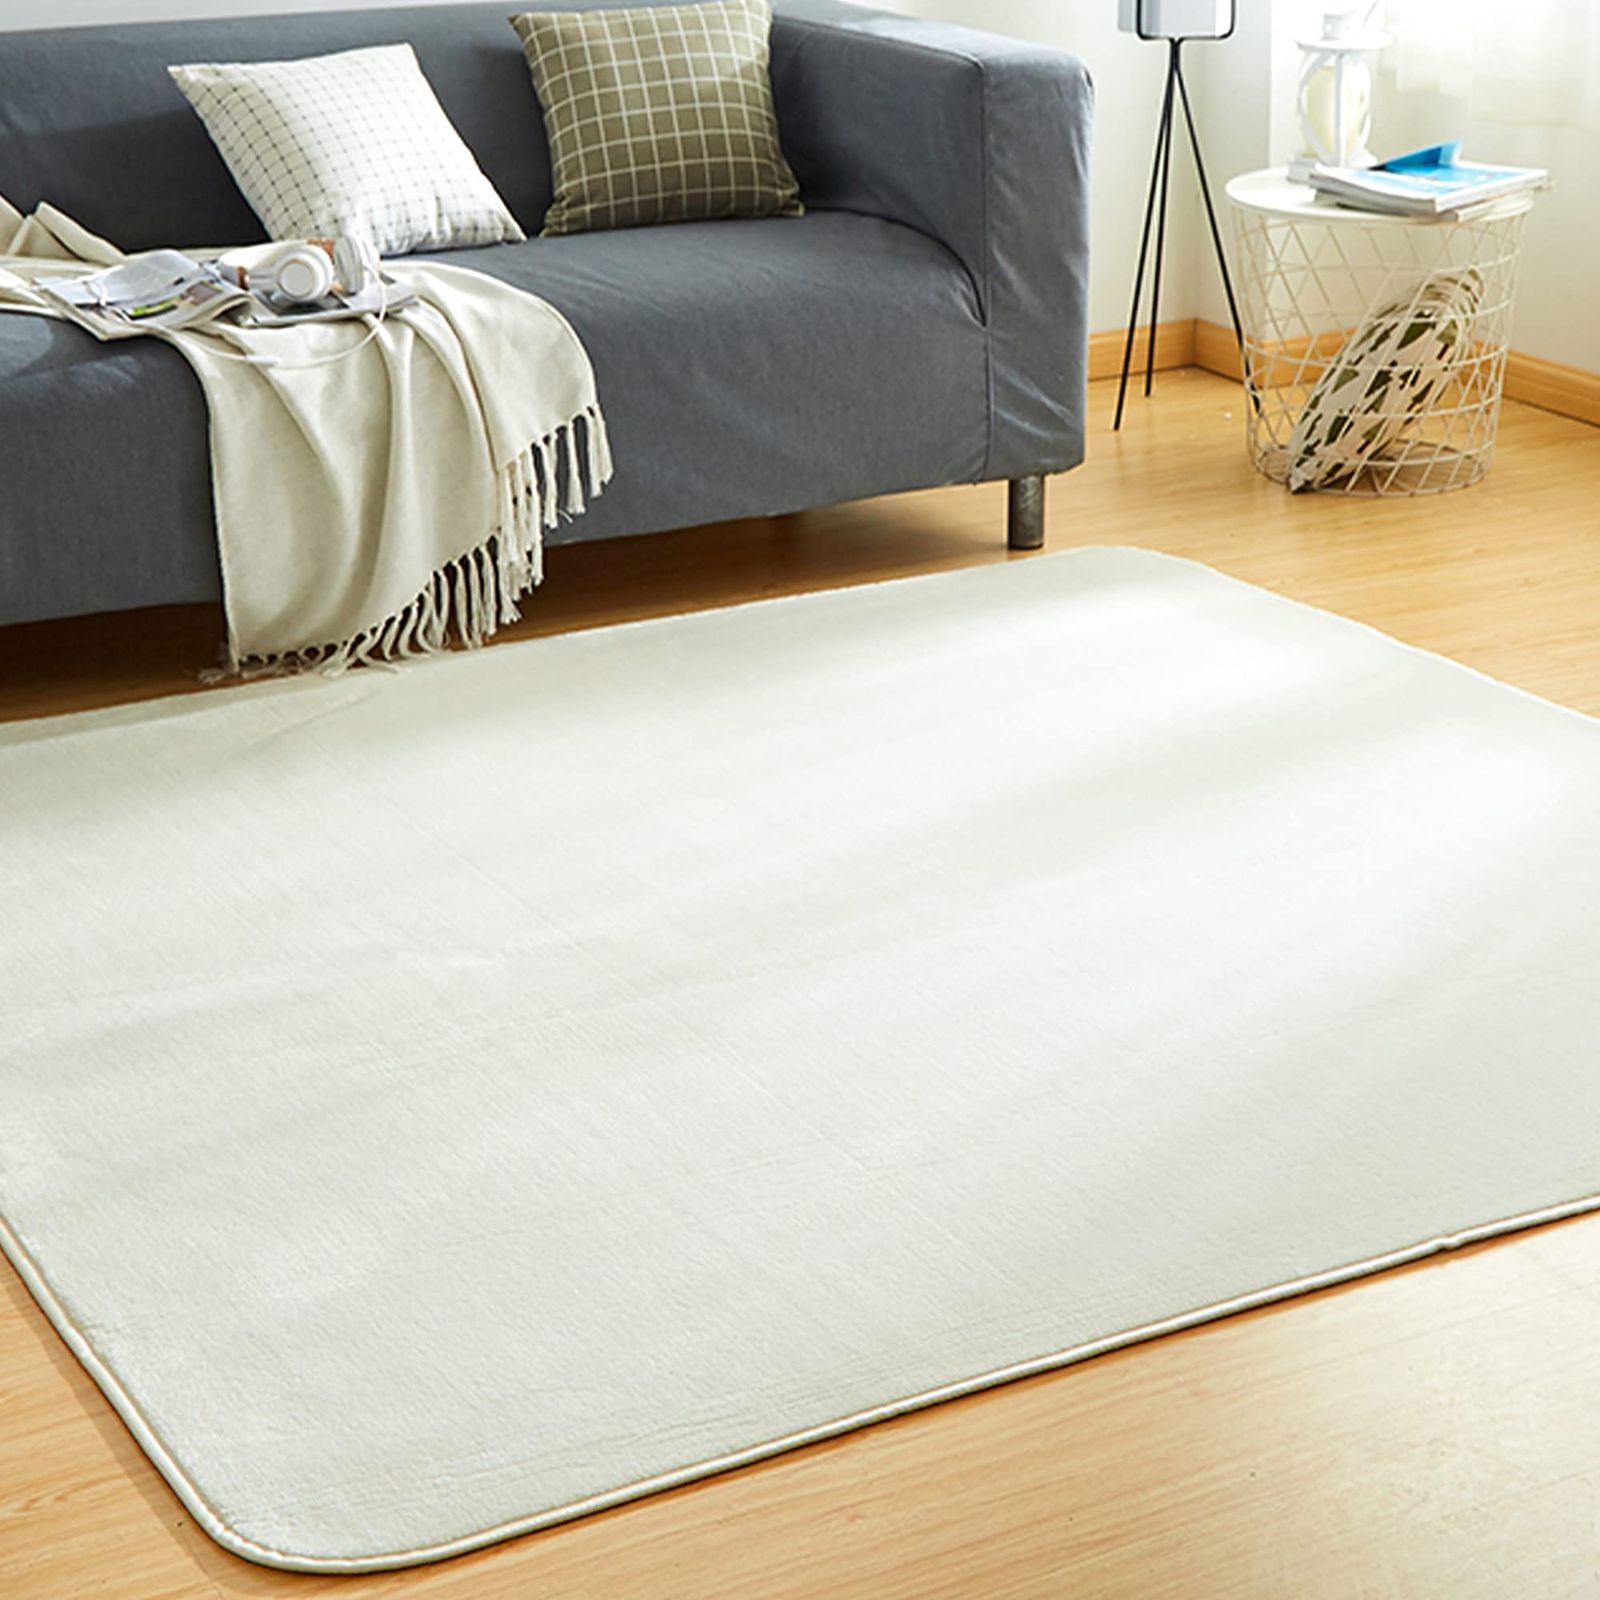 VK Living カーペット ラグ ラグマット 絨毯 135×185cm(約1.5畳) 洗える 滑り止め付 防ダニ 抗菌 防臭 1年中使えるタイプ 床暖房 ホットカーペット対応 アイボリー